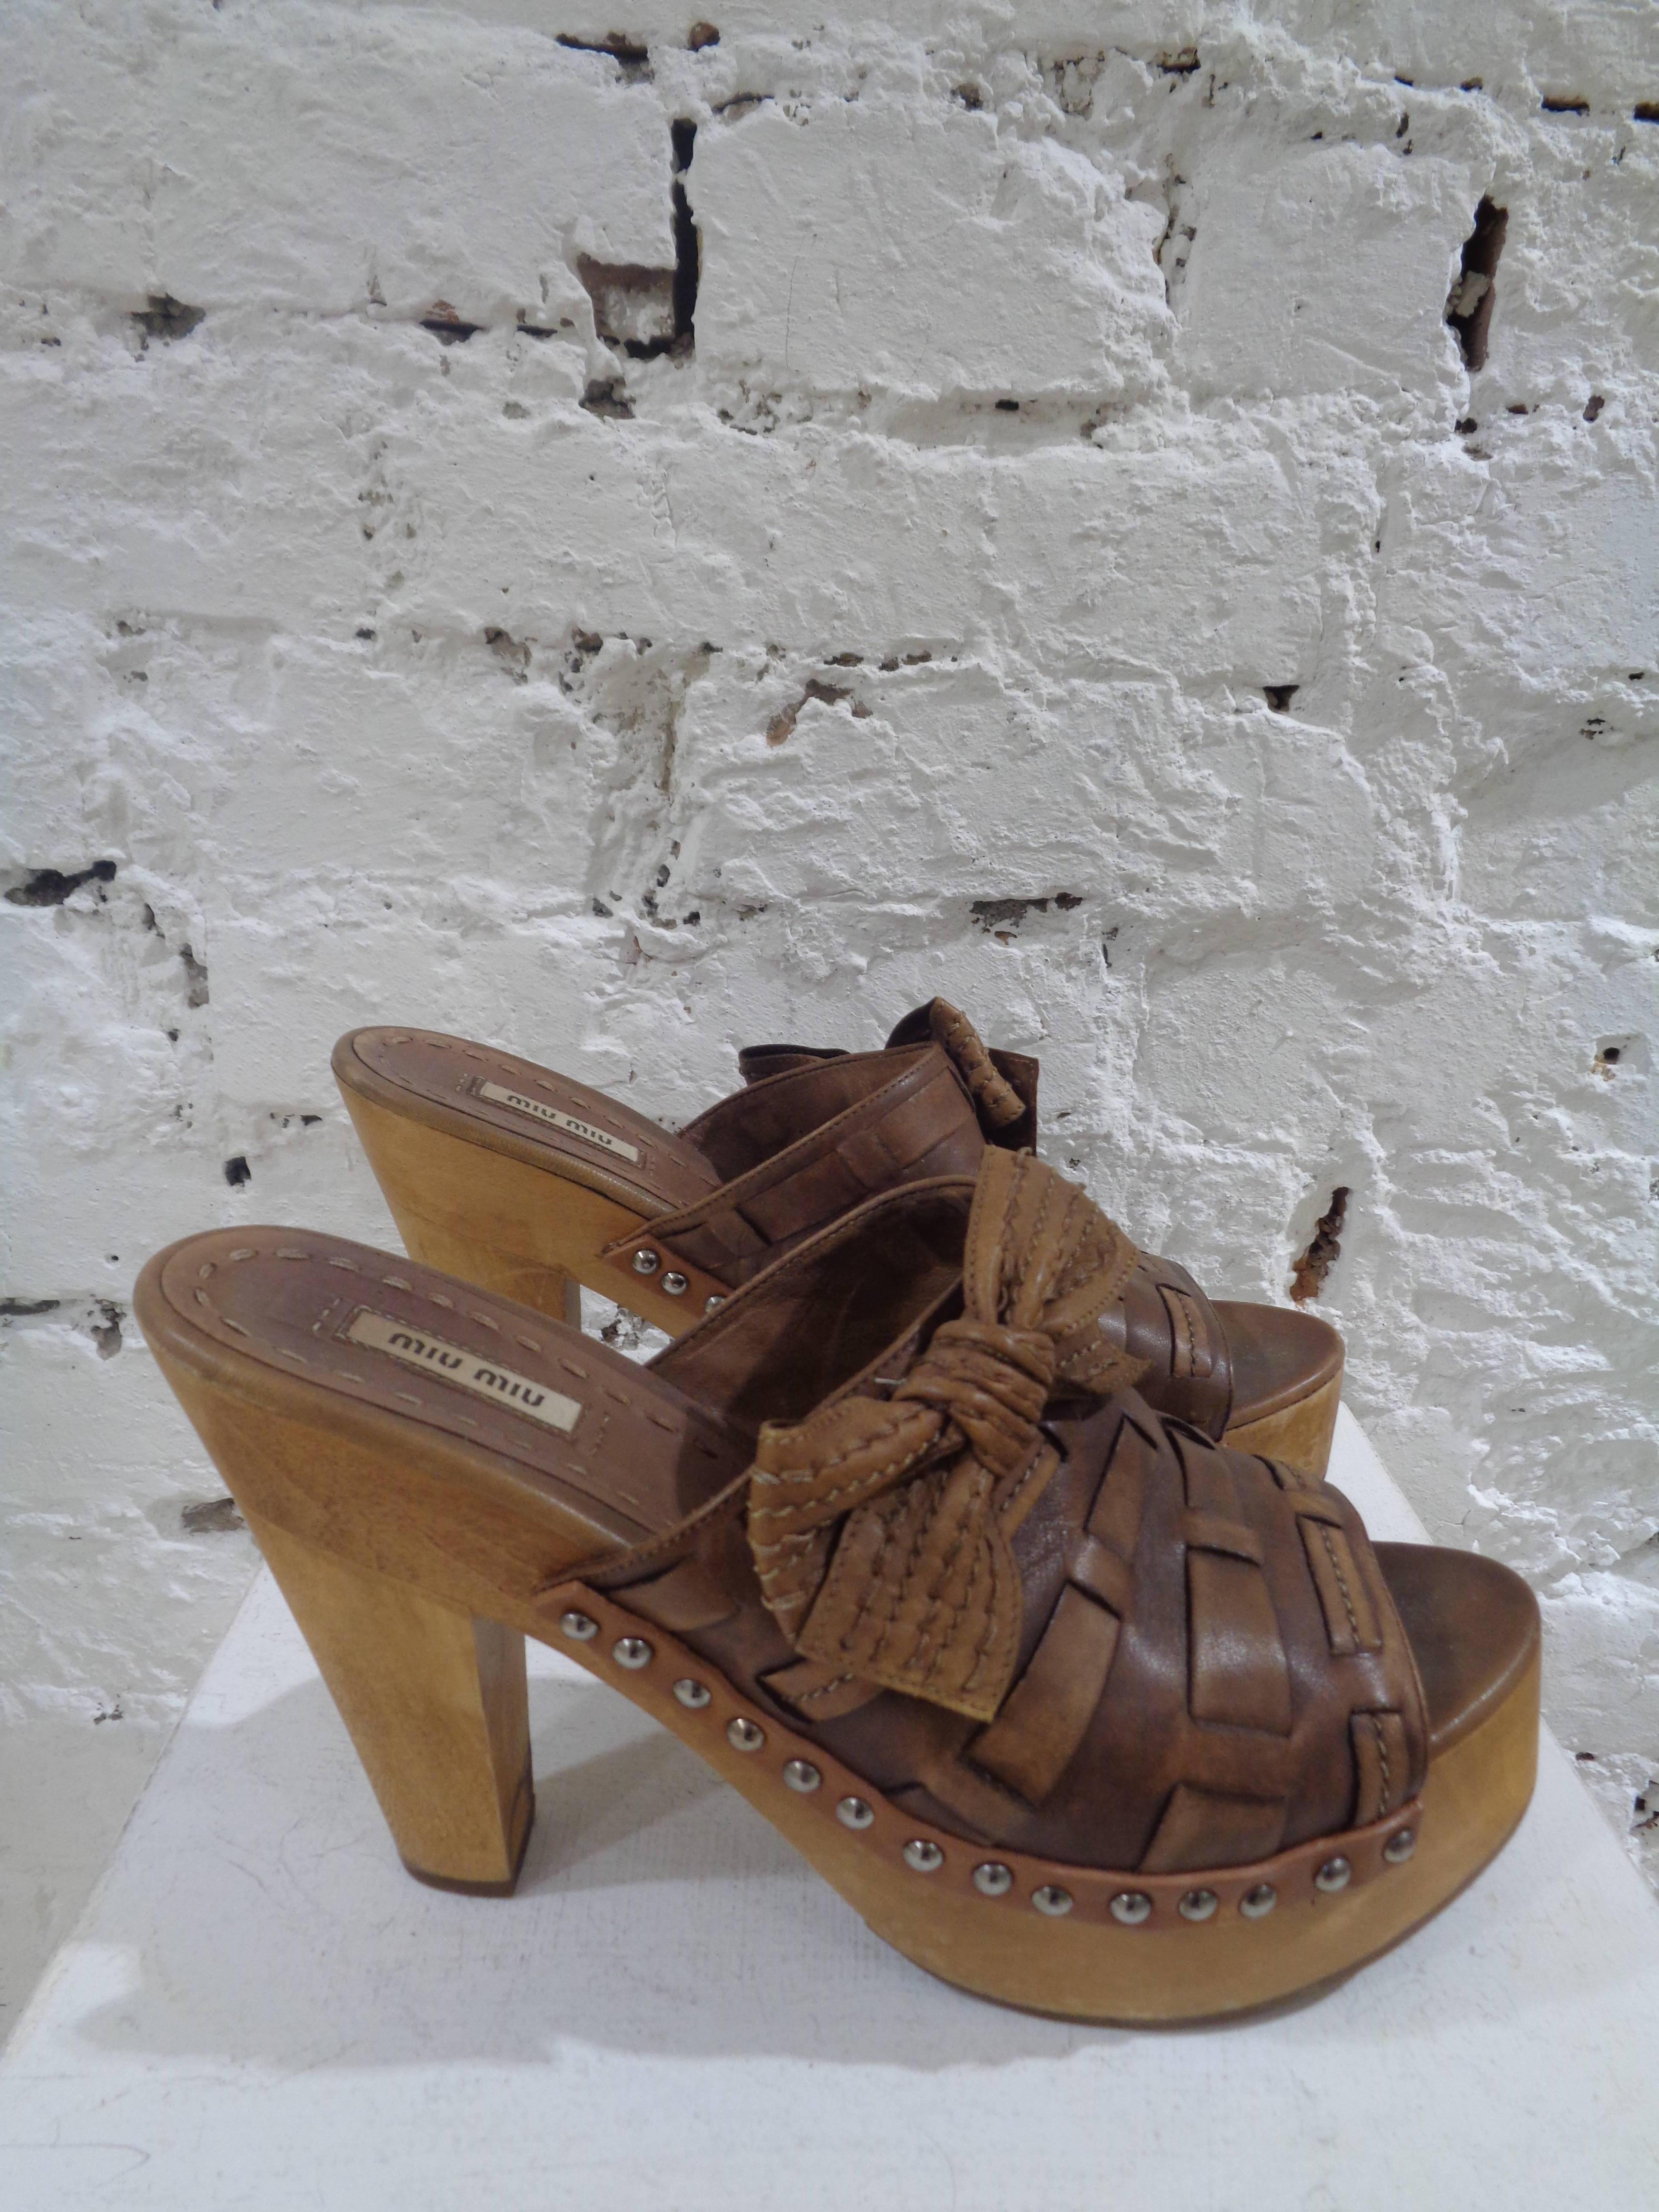 Miu Miu brown high heels sandals

totally made in italy

in size 40

unworn